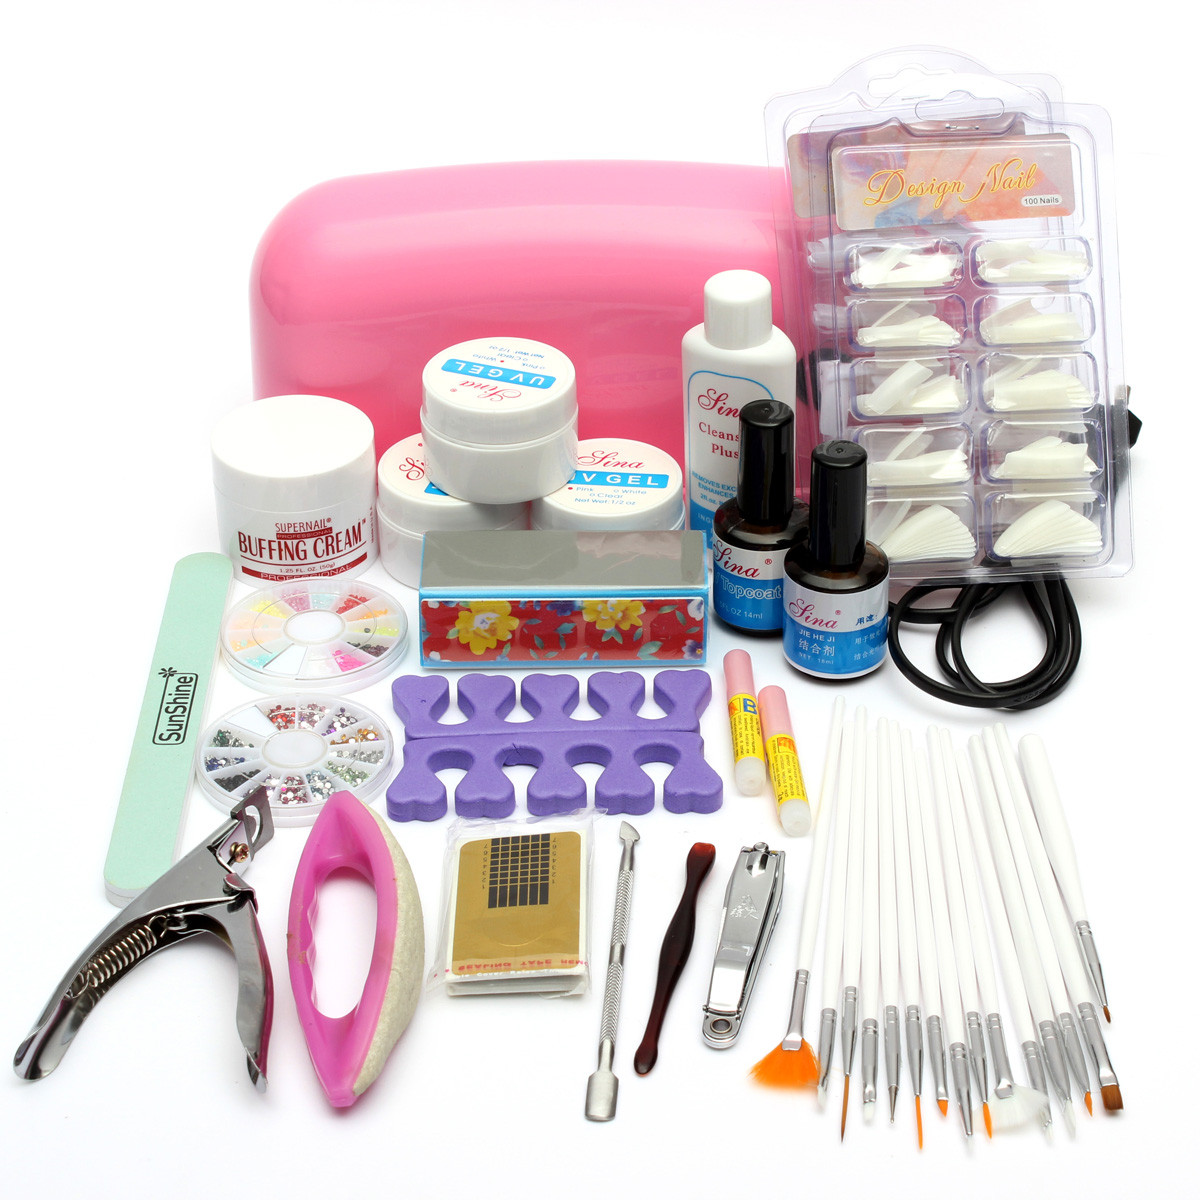 Best ideas about DIY Gel Nail Kit
. Save or Pin Acrylic Powder Nail Art Kit UV Gel UV lamp Manicure DIY Now.